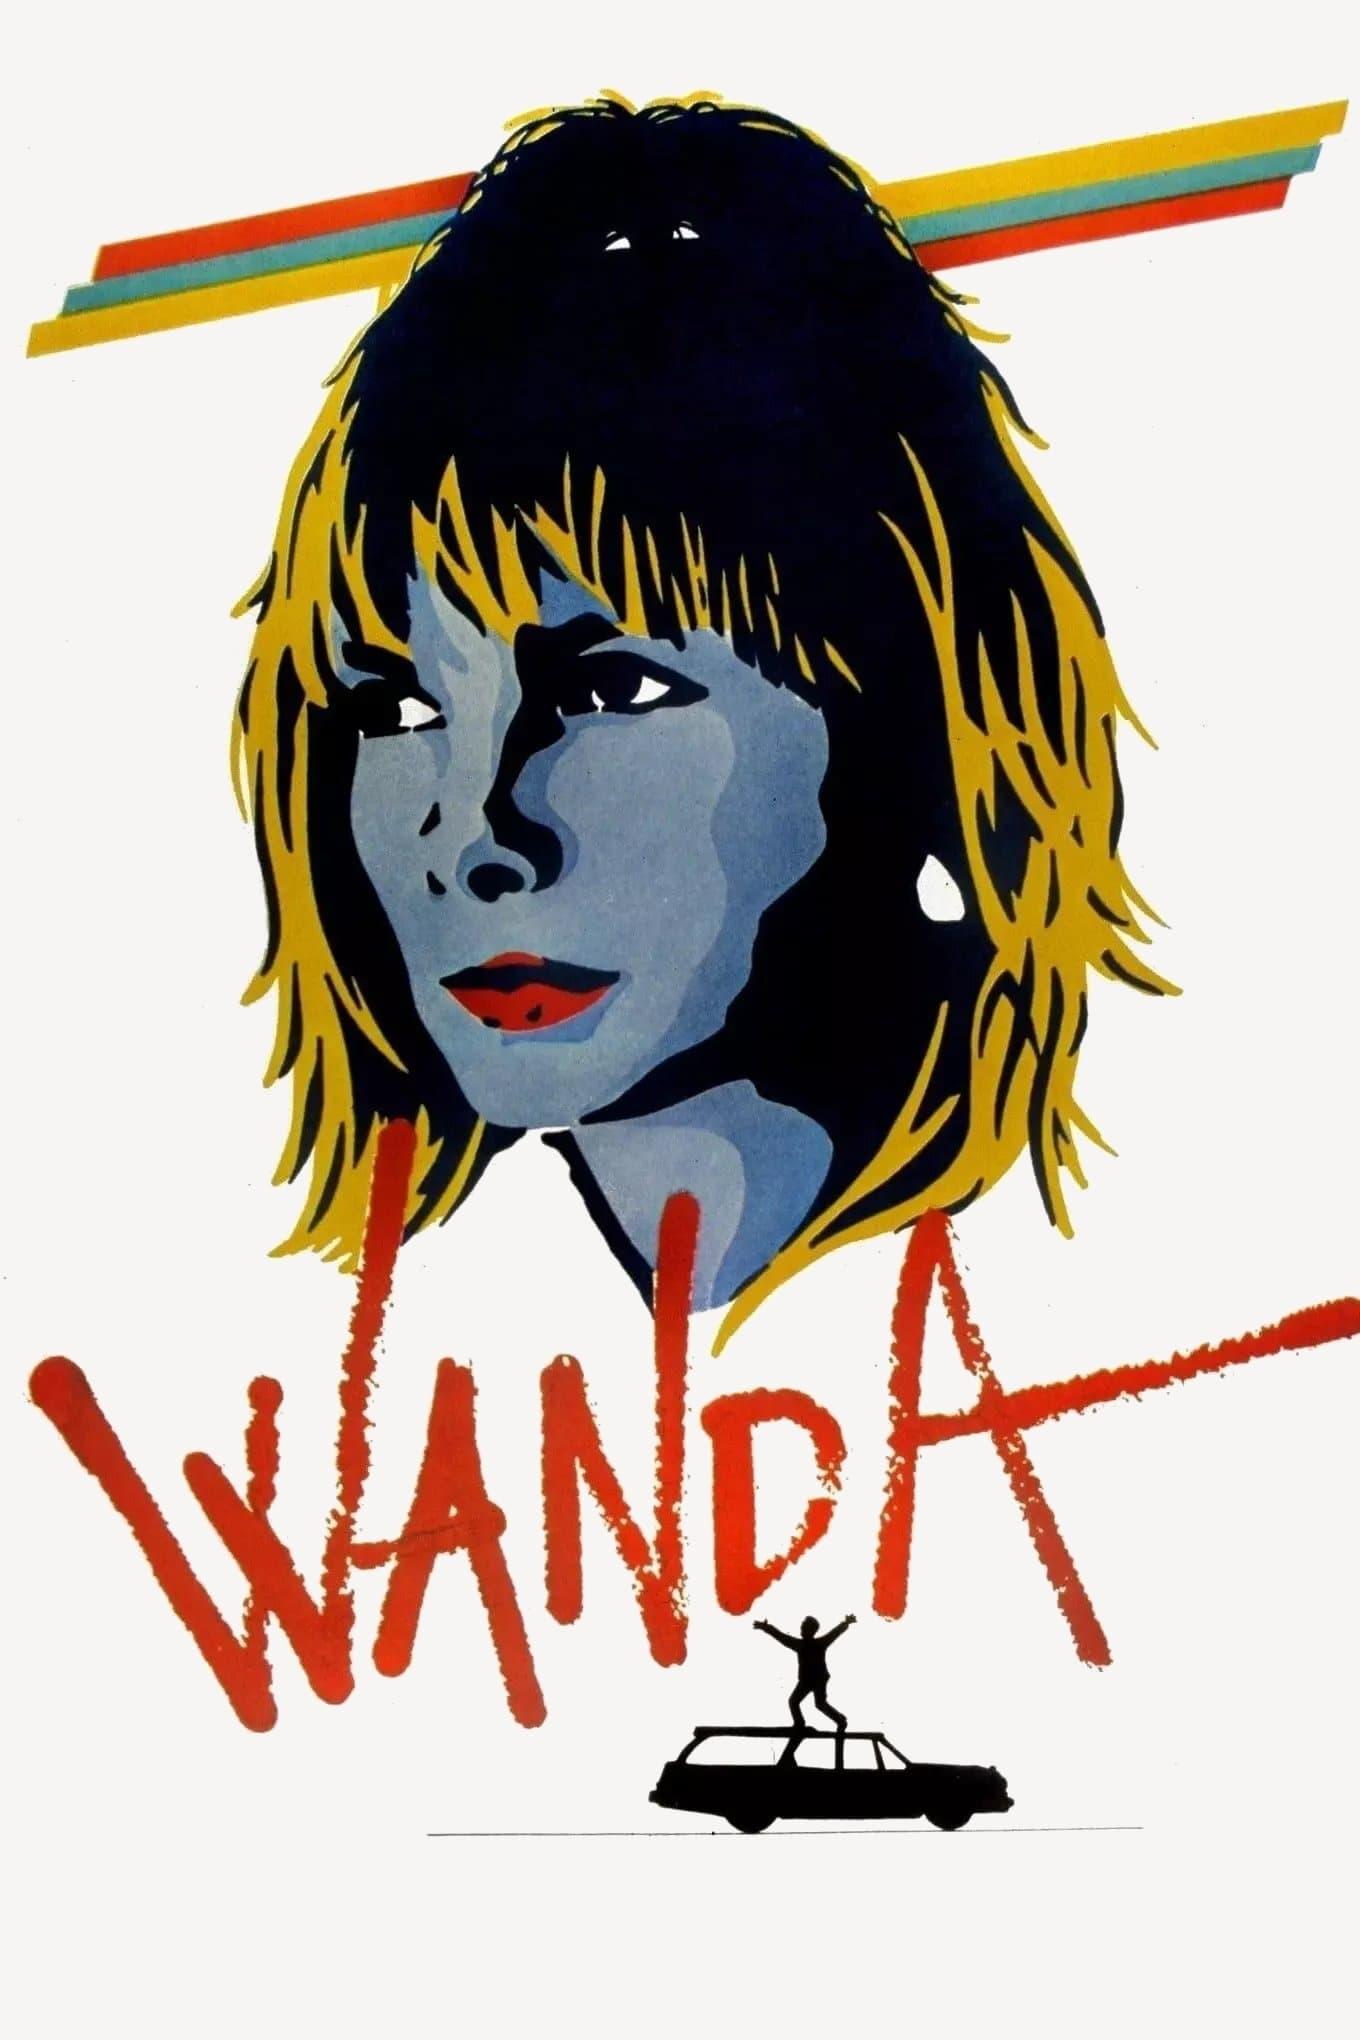 Wanda poster